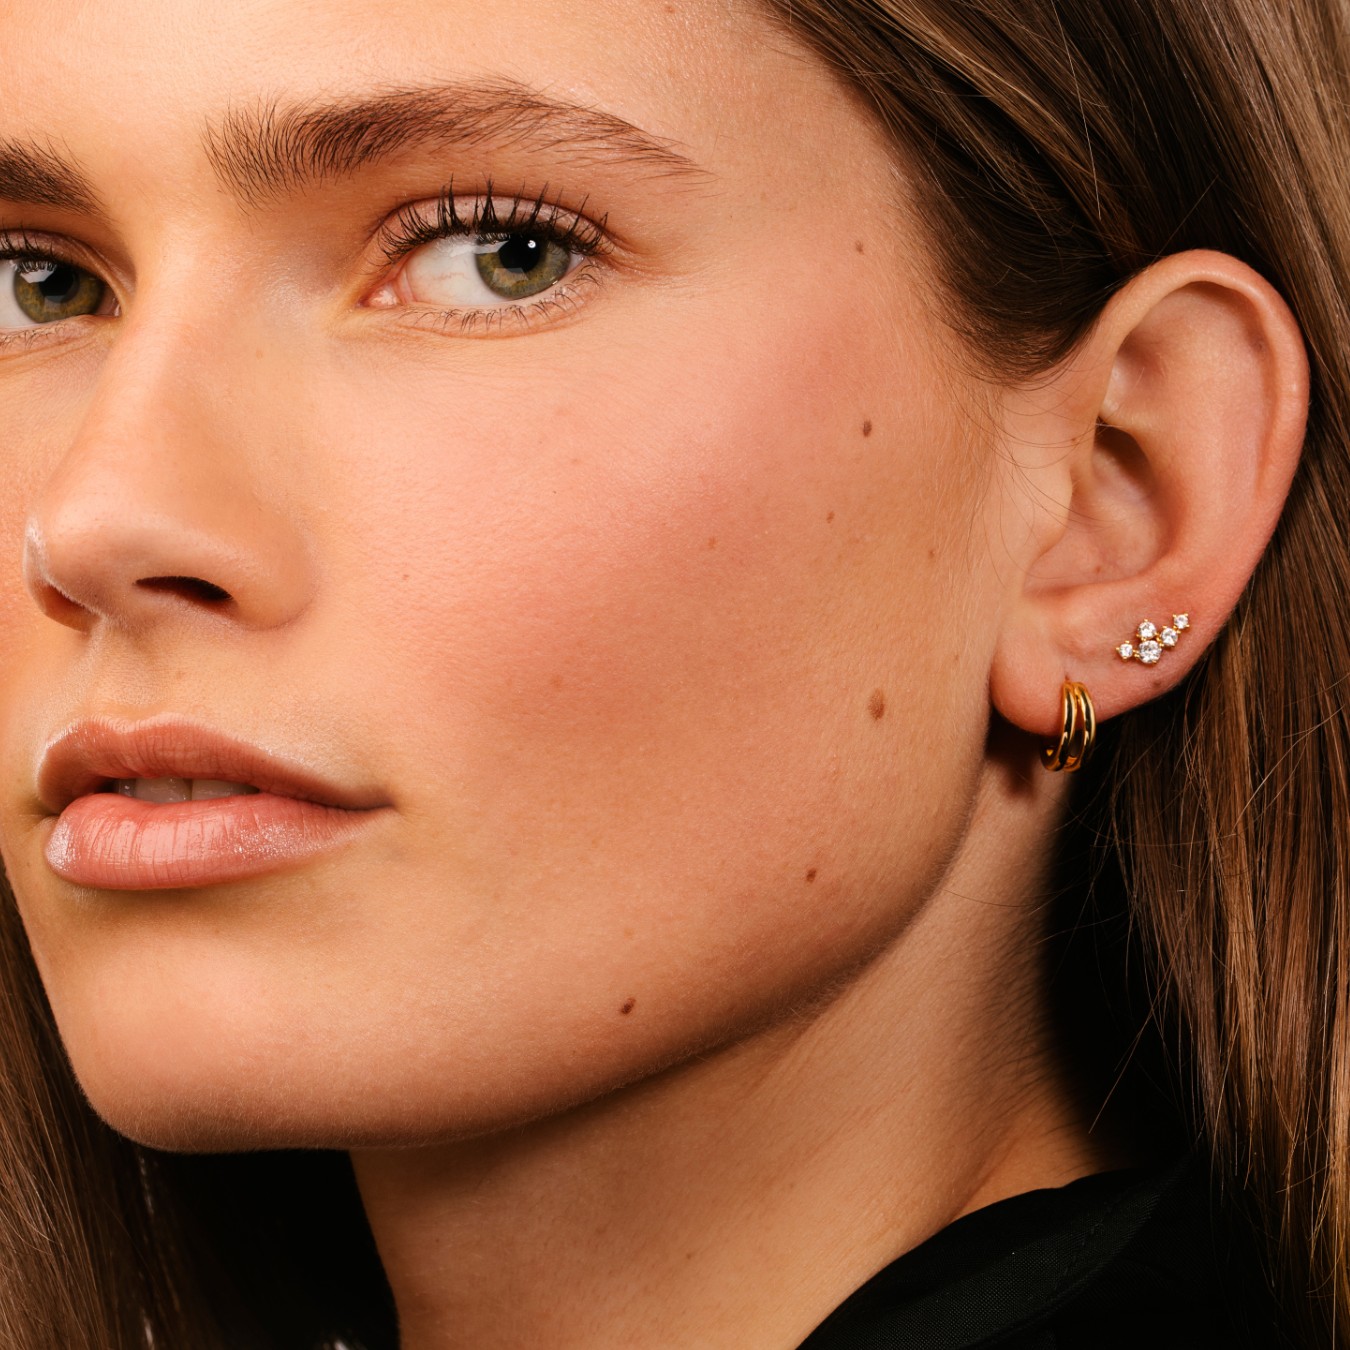 Donna earrings